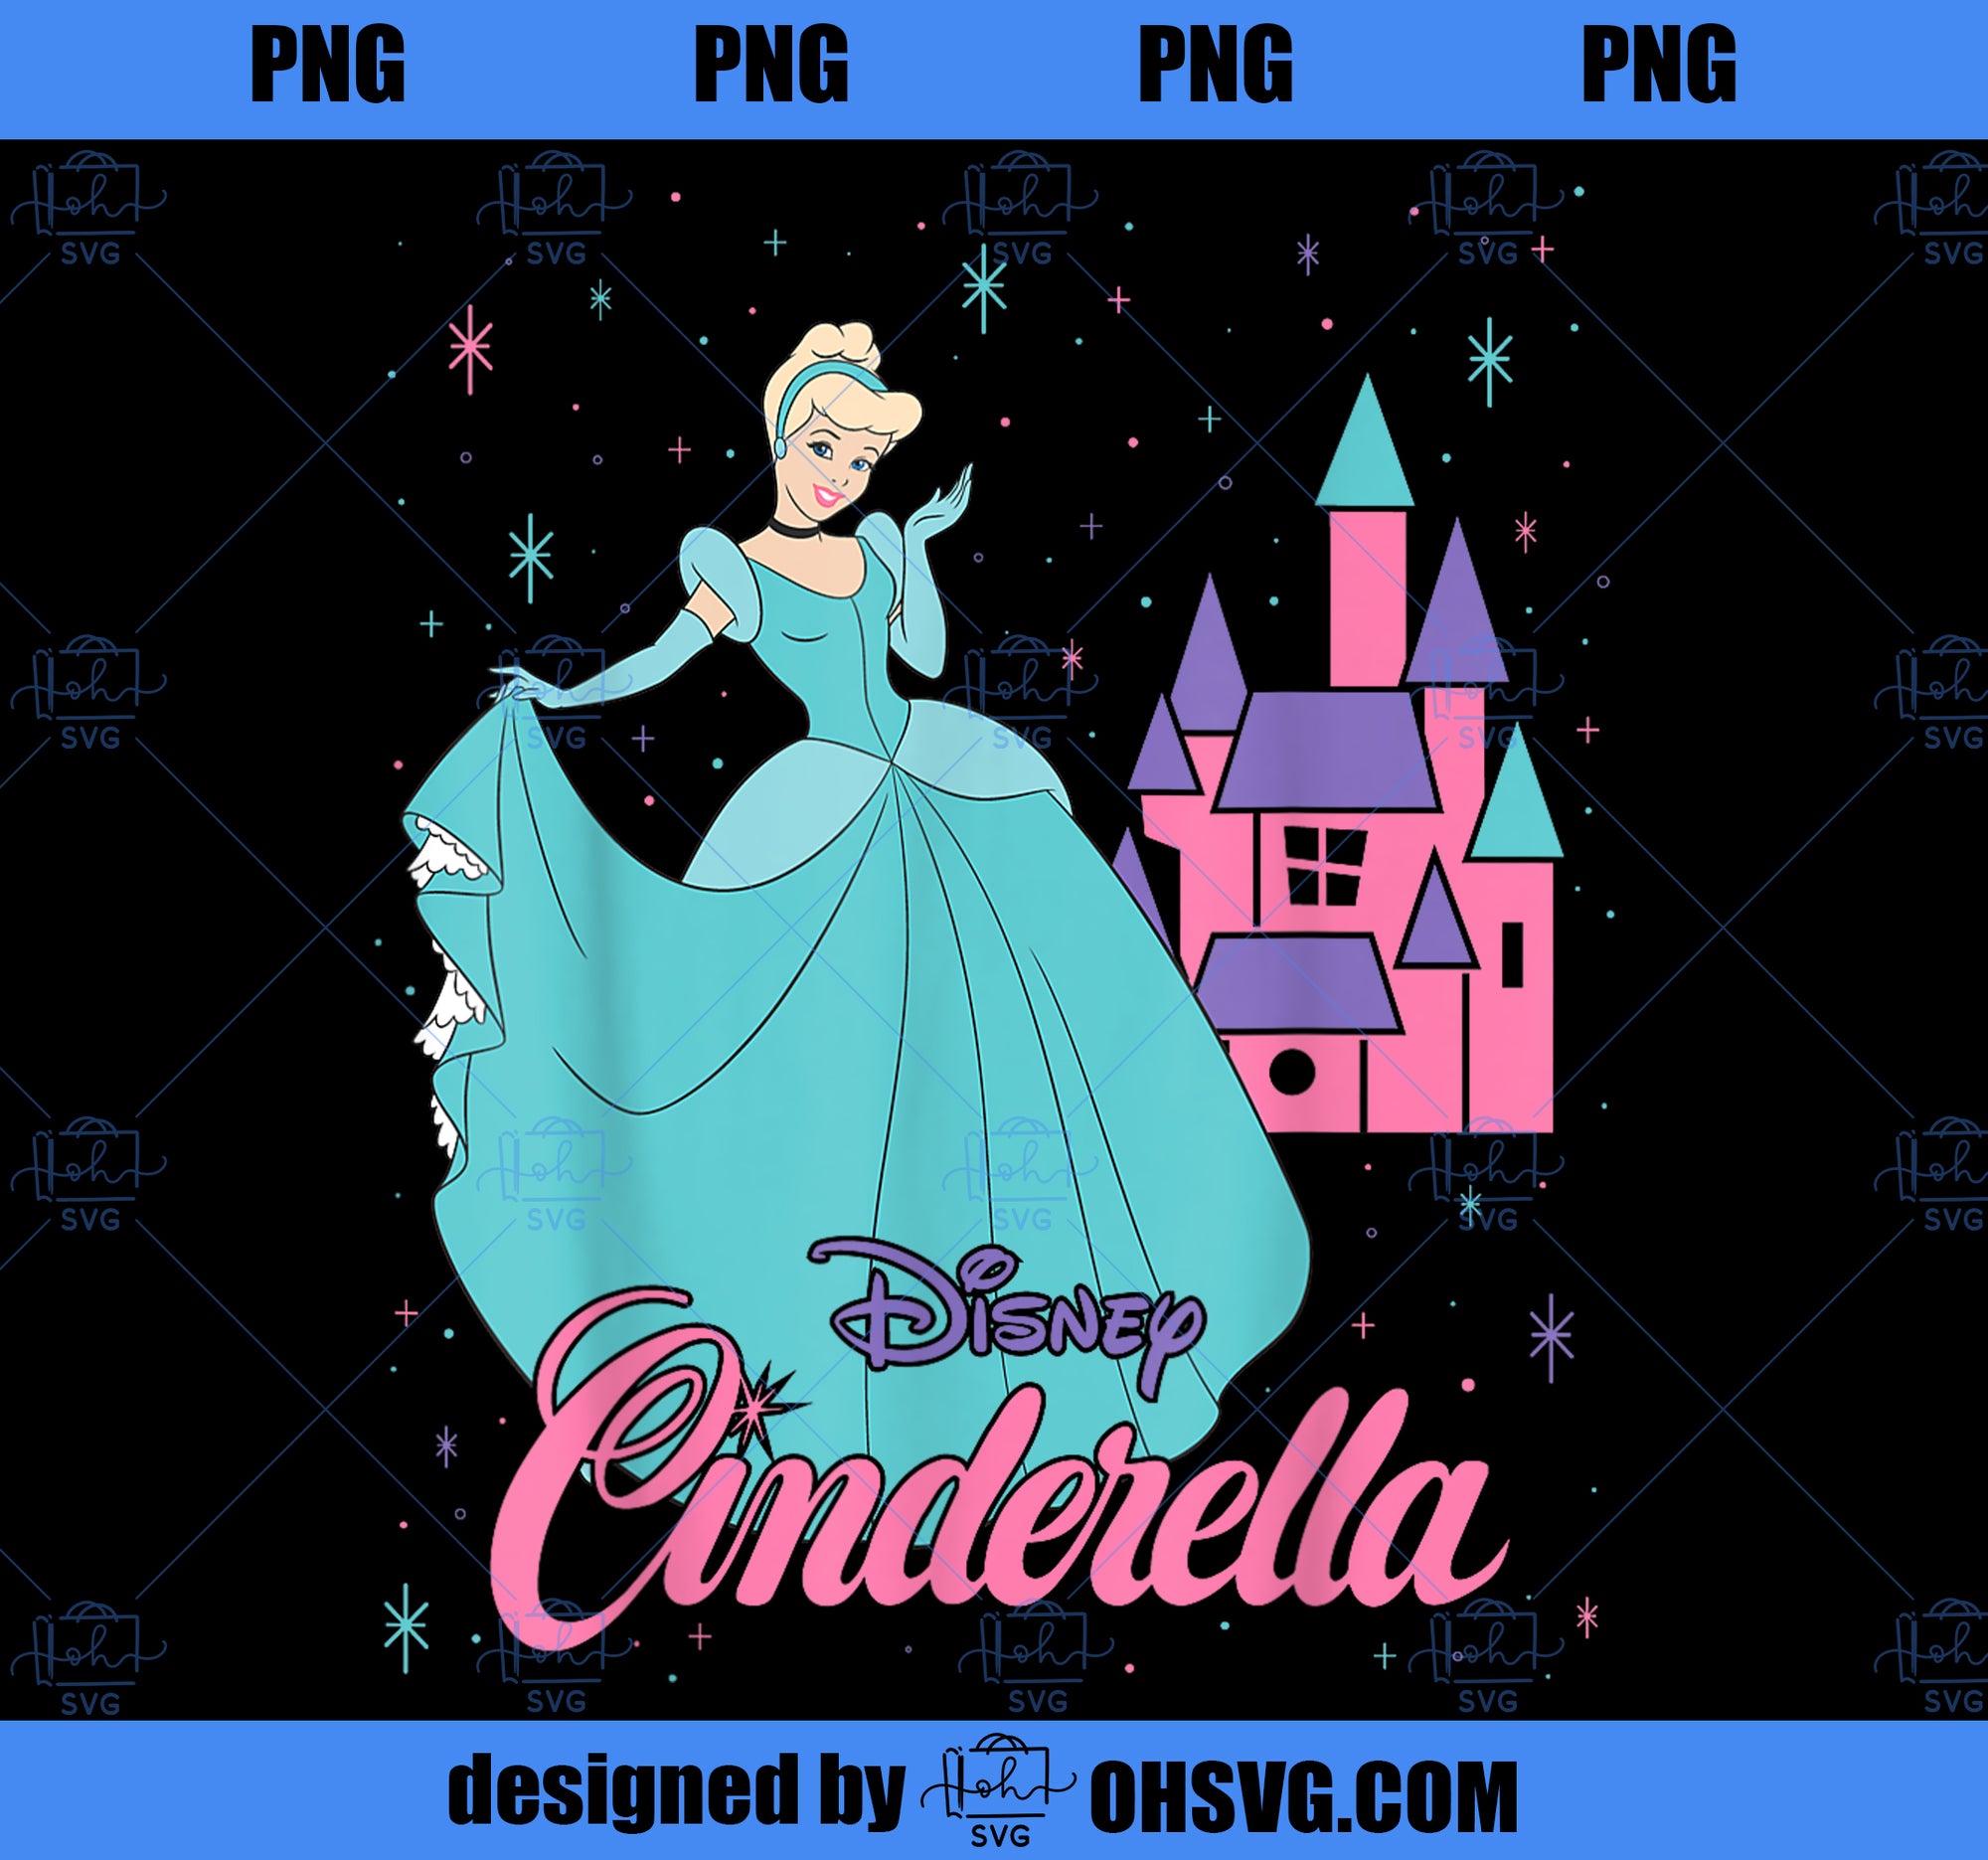 Disney Princess Cinderella Retro 90s PNG, Disney PNG, Princess PNG